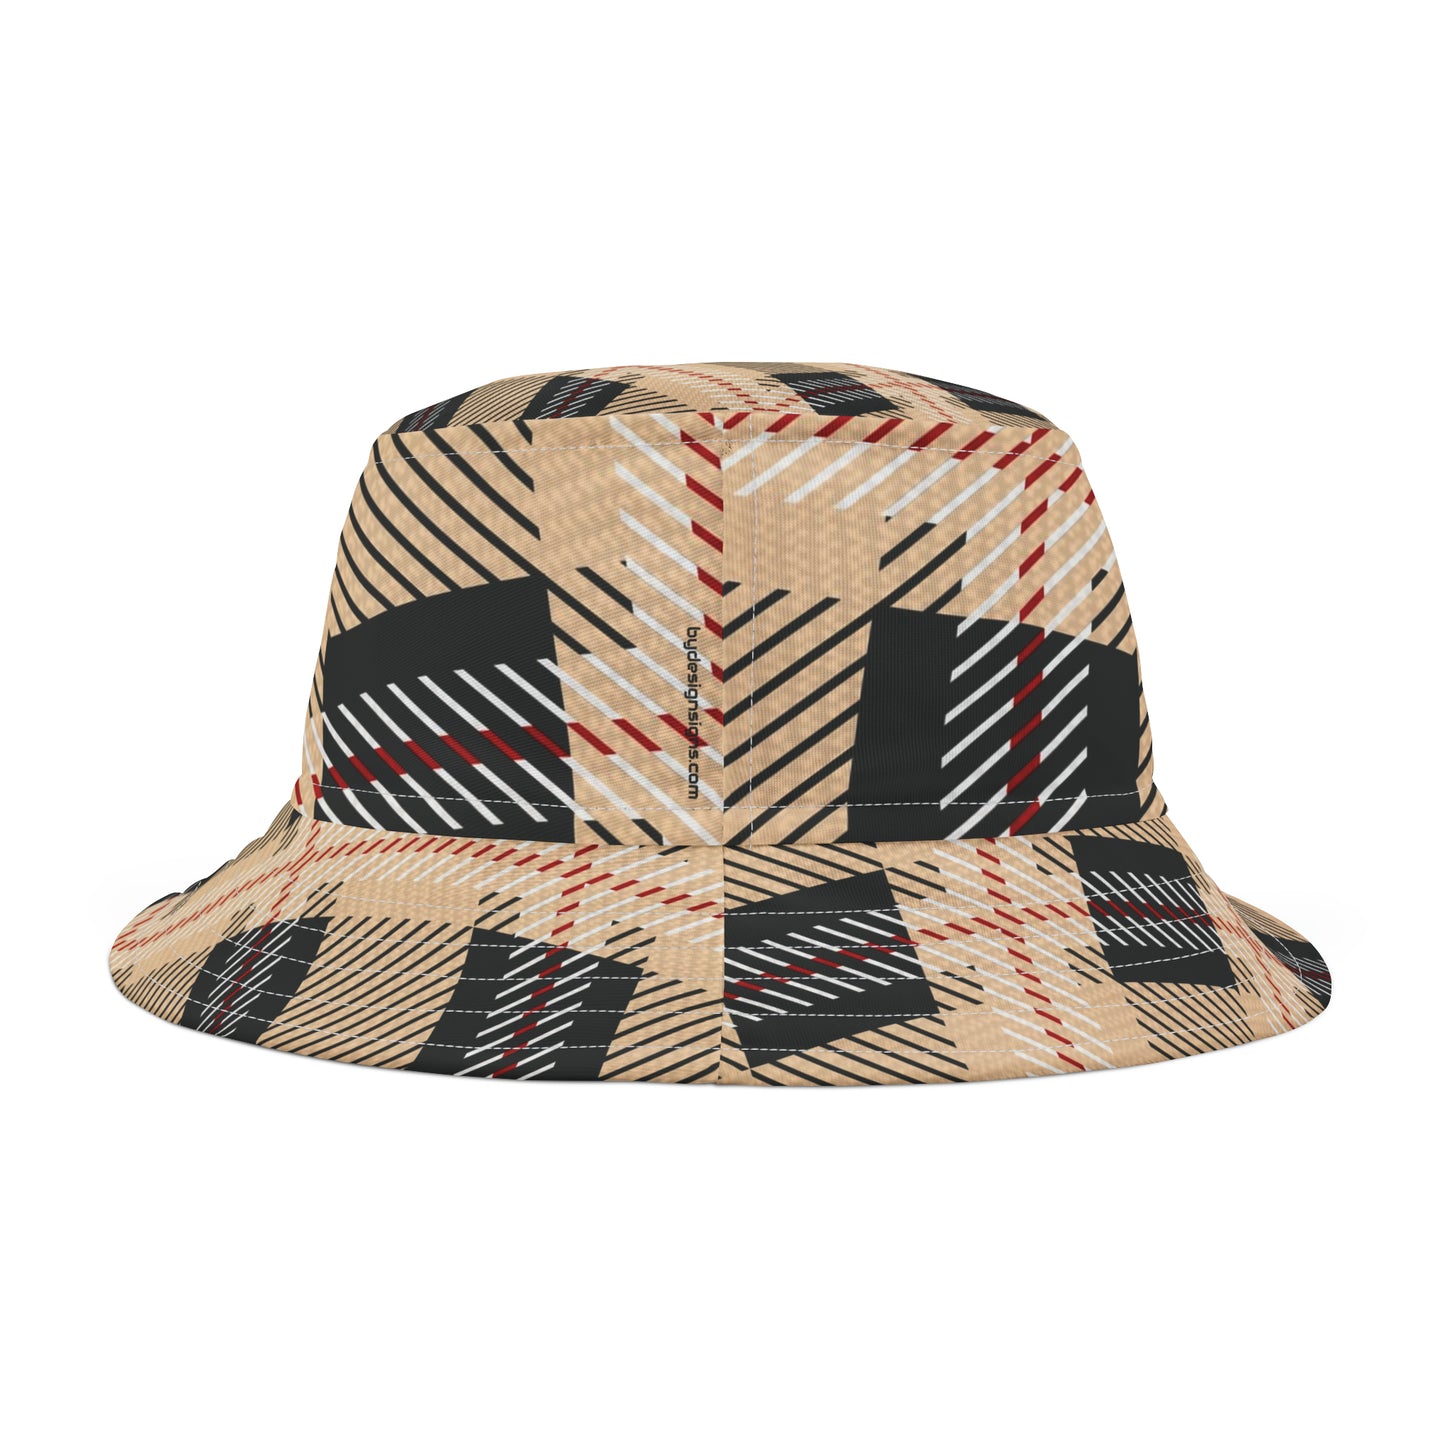 Scottish Plaid Tan-Black-Red/White Bucket Hat